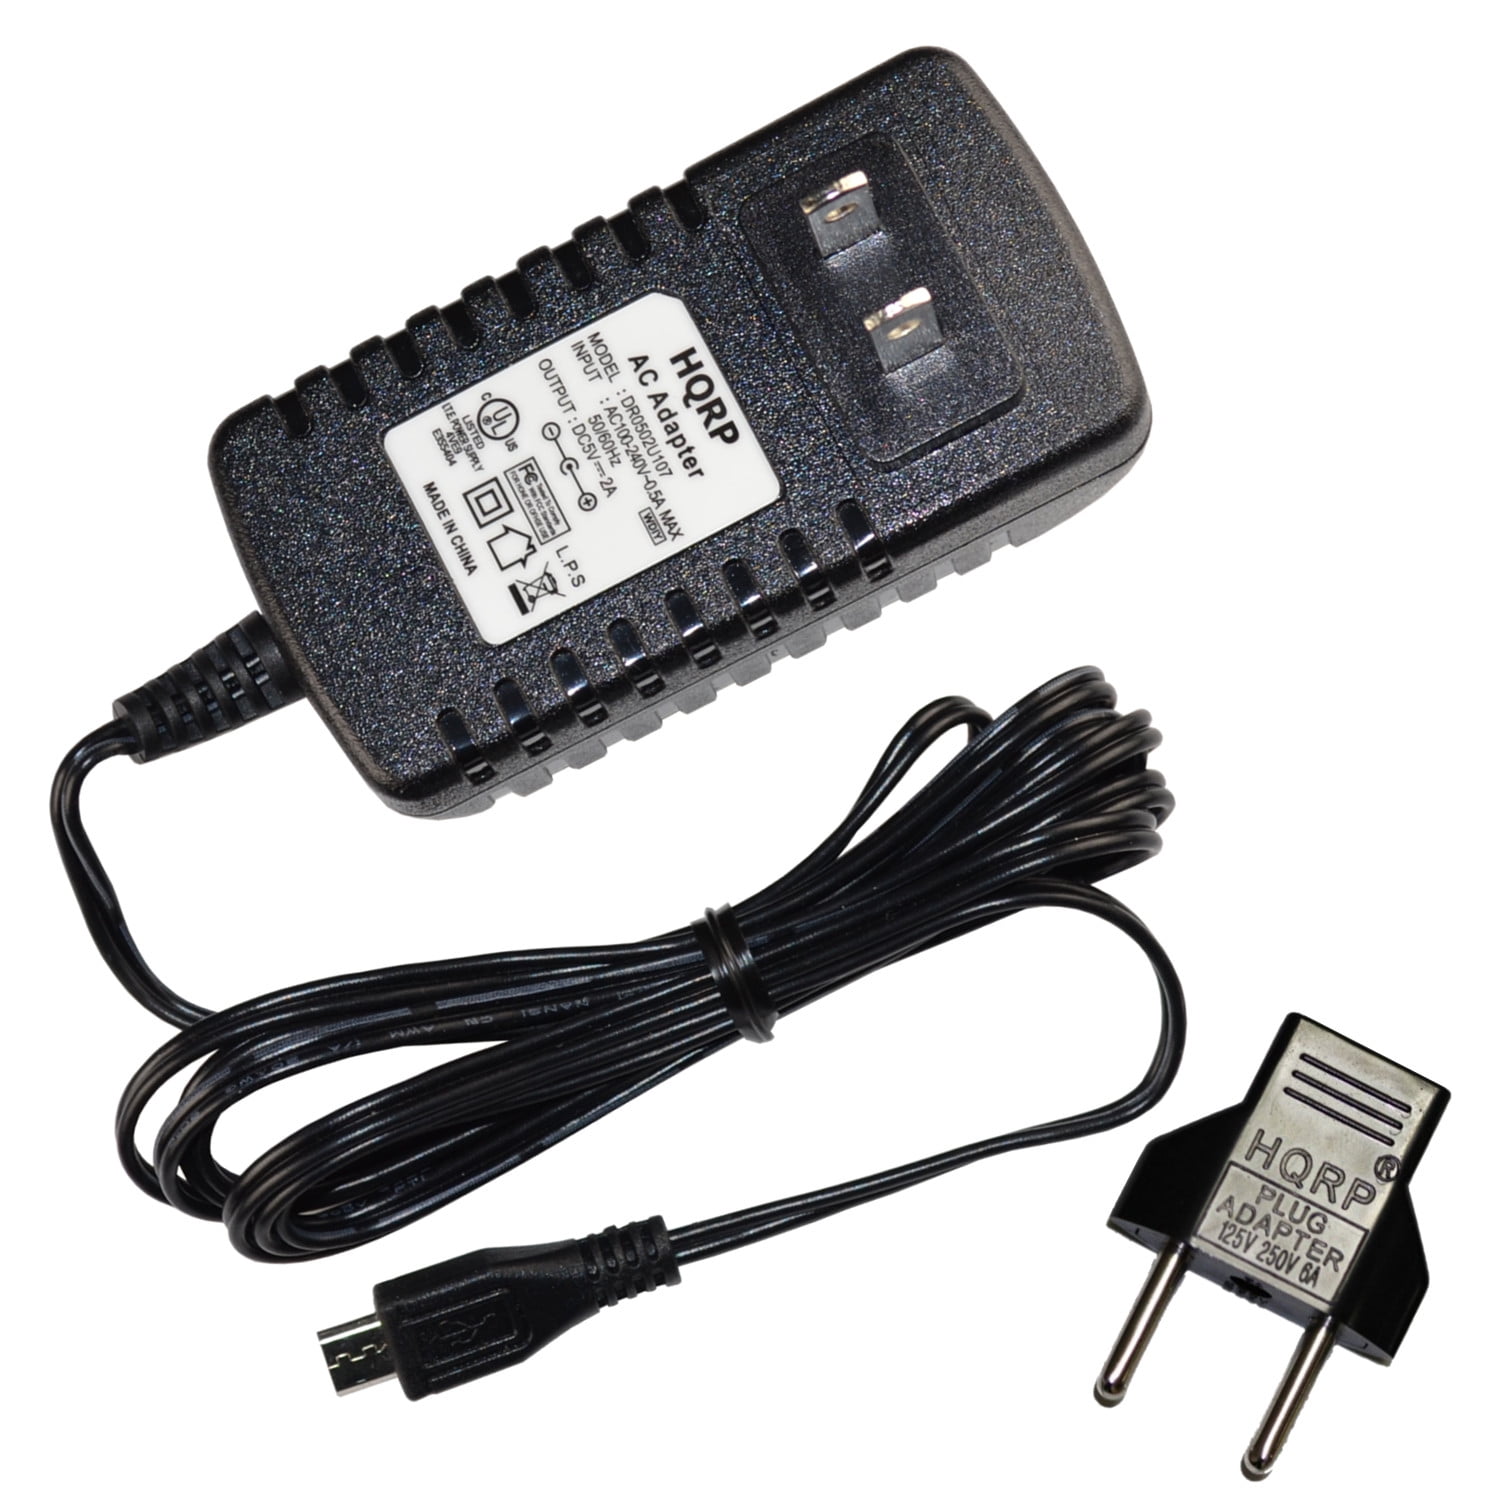 HQRP AC Adapter Works with Sony SRS-BTX300 SRS-X5 Portable Bluetooth Wireless Speaker System SRSBTX300 SRSBTX300//BLK SRSBTX300//WHT Power Supply Cord Adaptor Plus Euro Plug Adapter